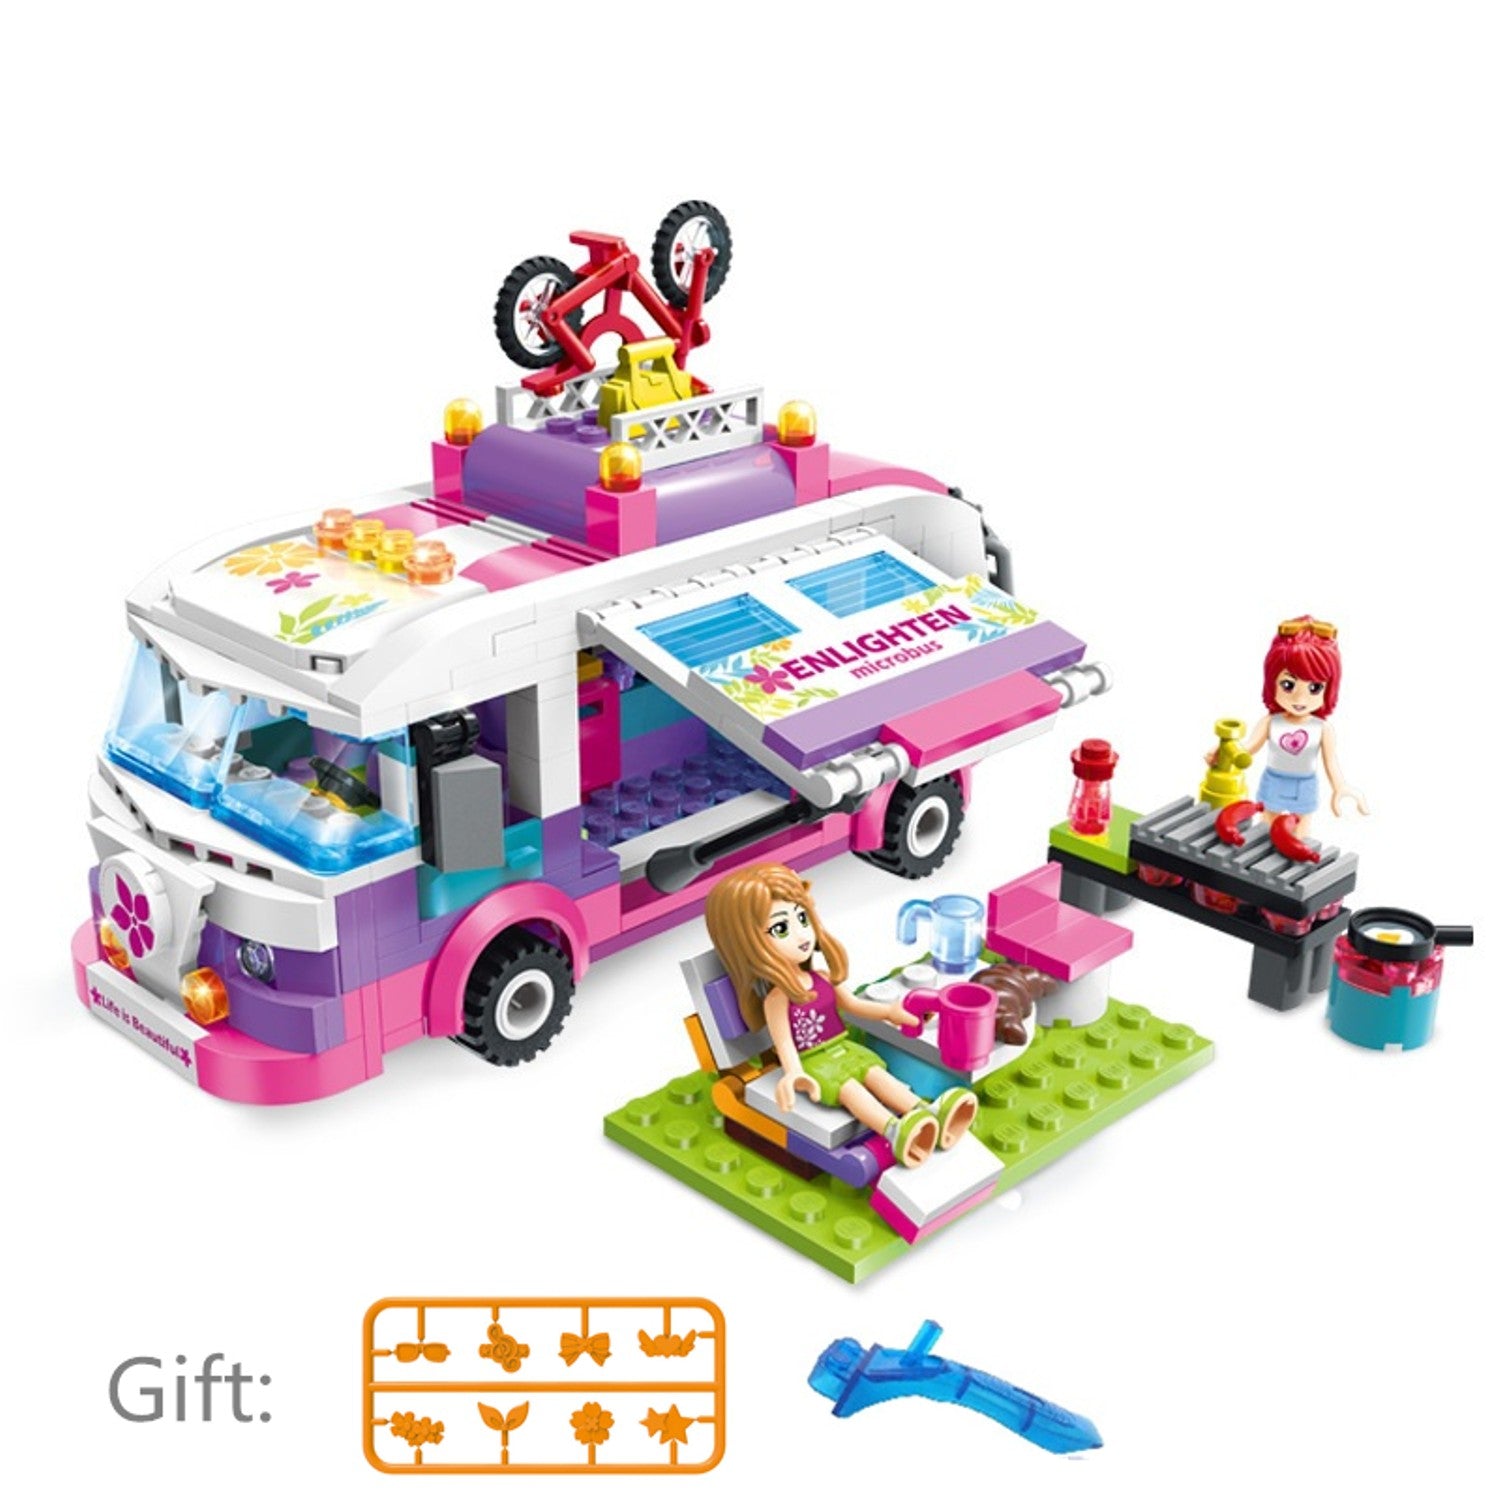 Lego Compatible Bus, Bus Lego Box, Building Blocks